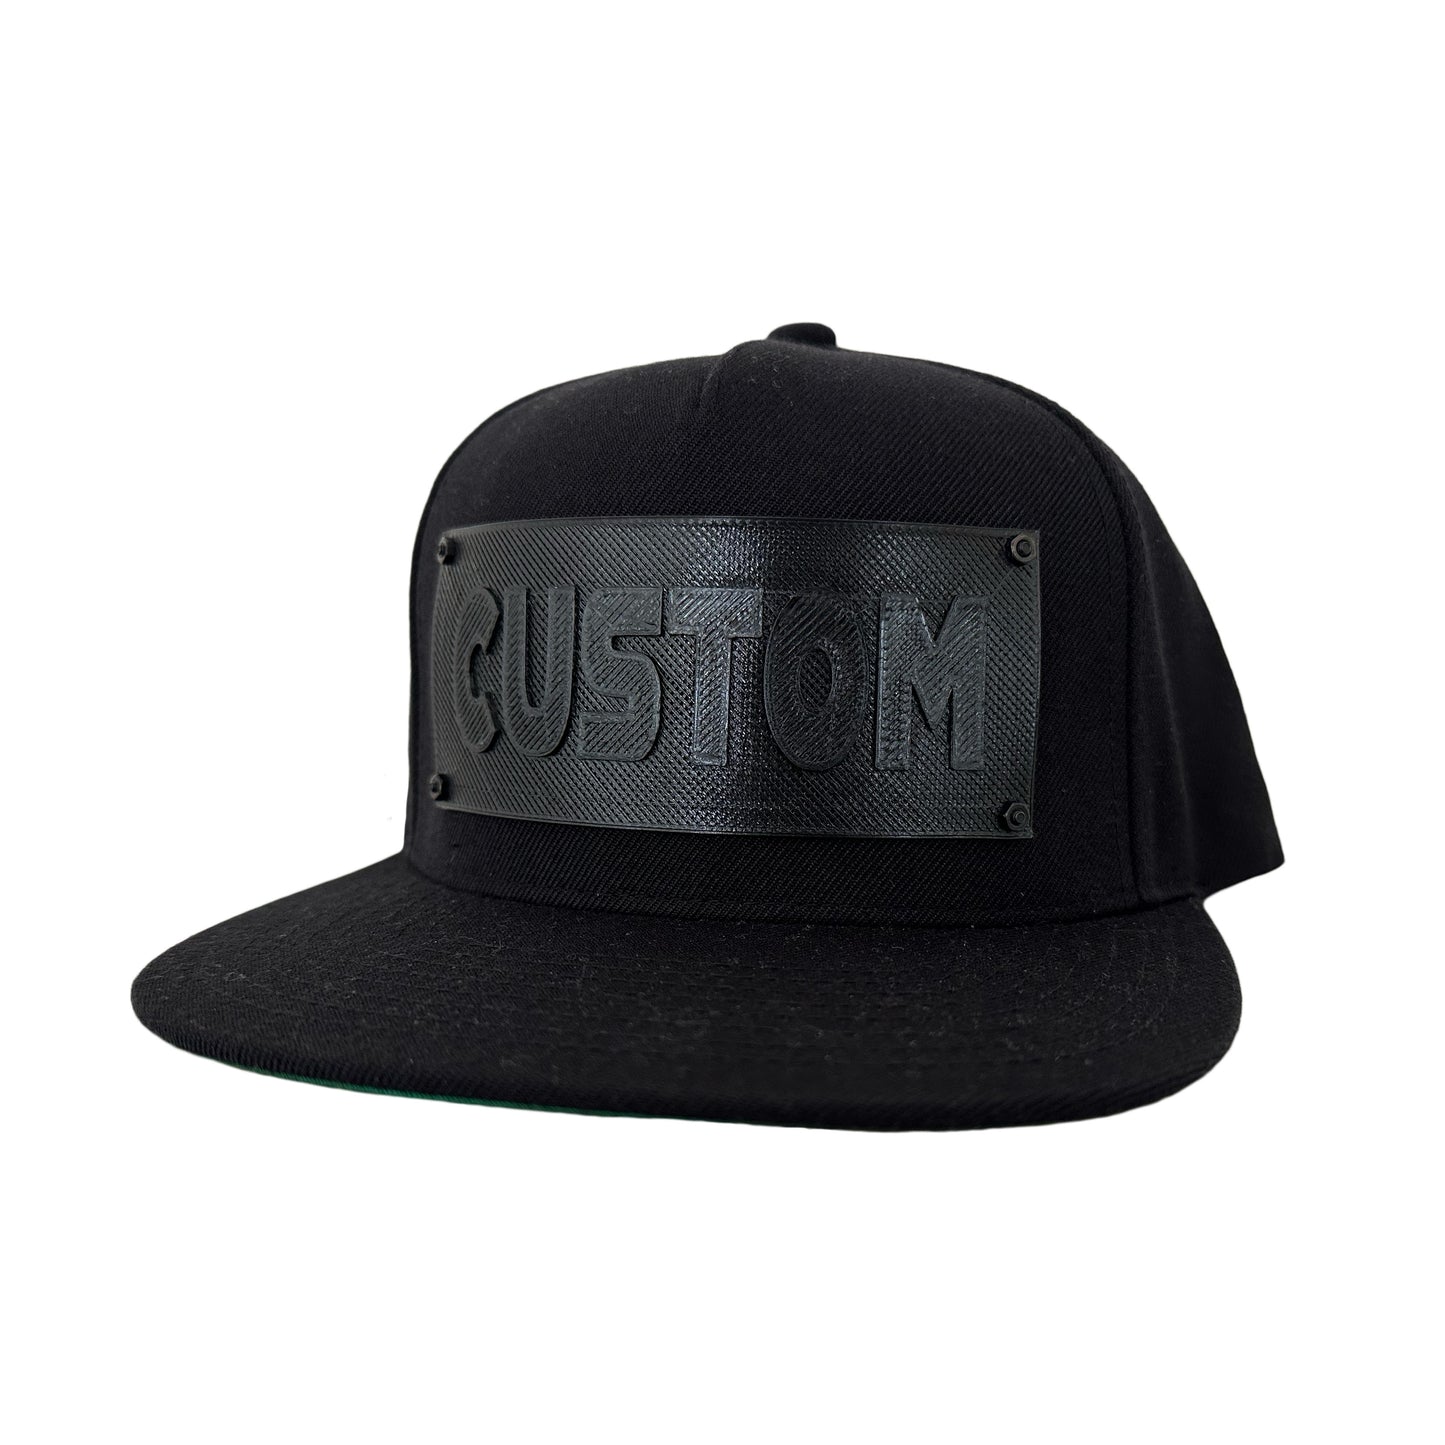 A black snapback baseball hat with a black logo panel that says"CUSTOM".